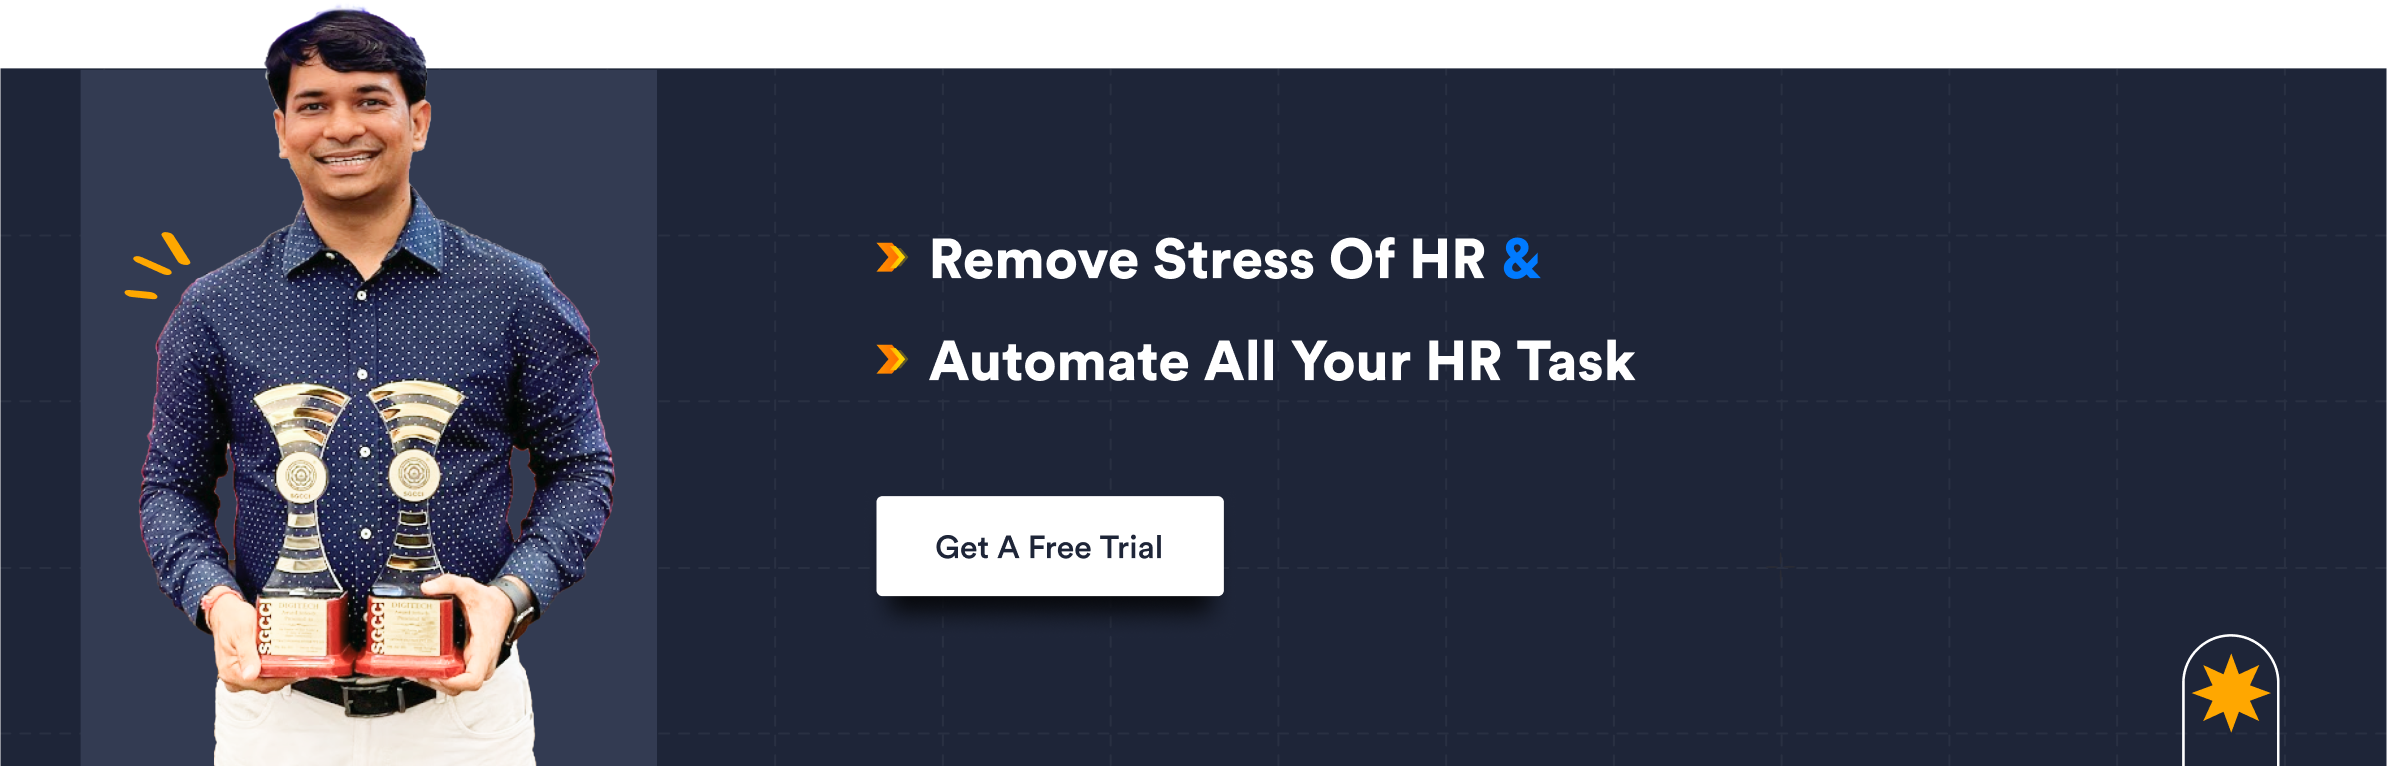 Remove Stress Of HR